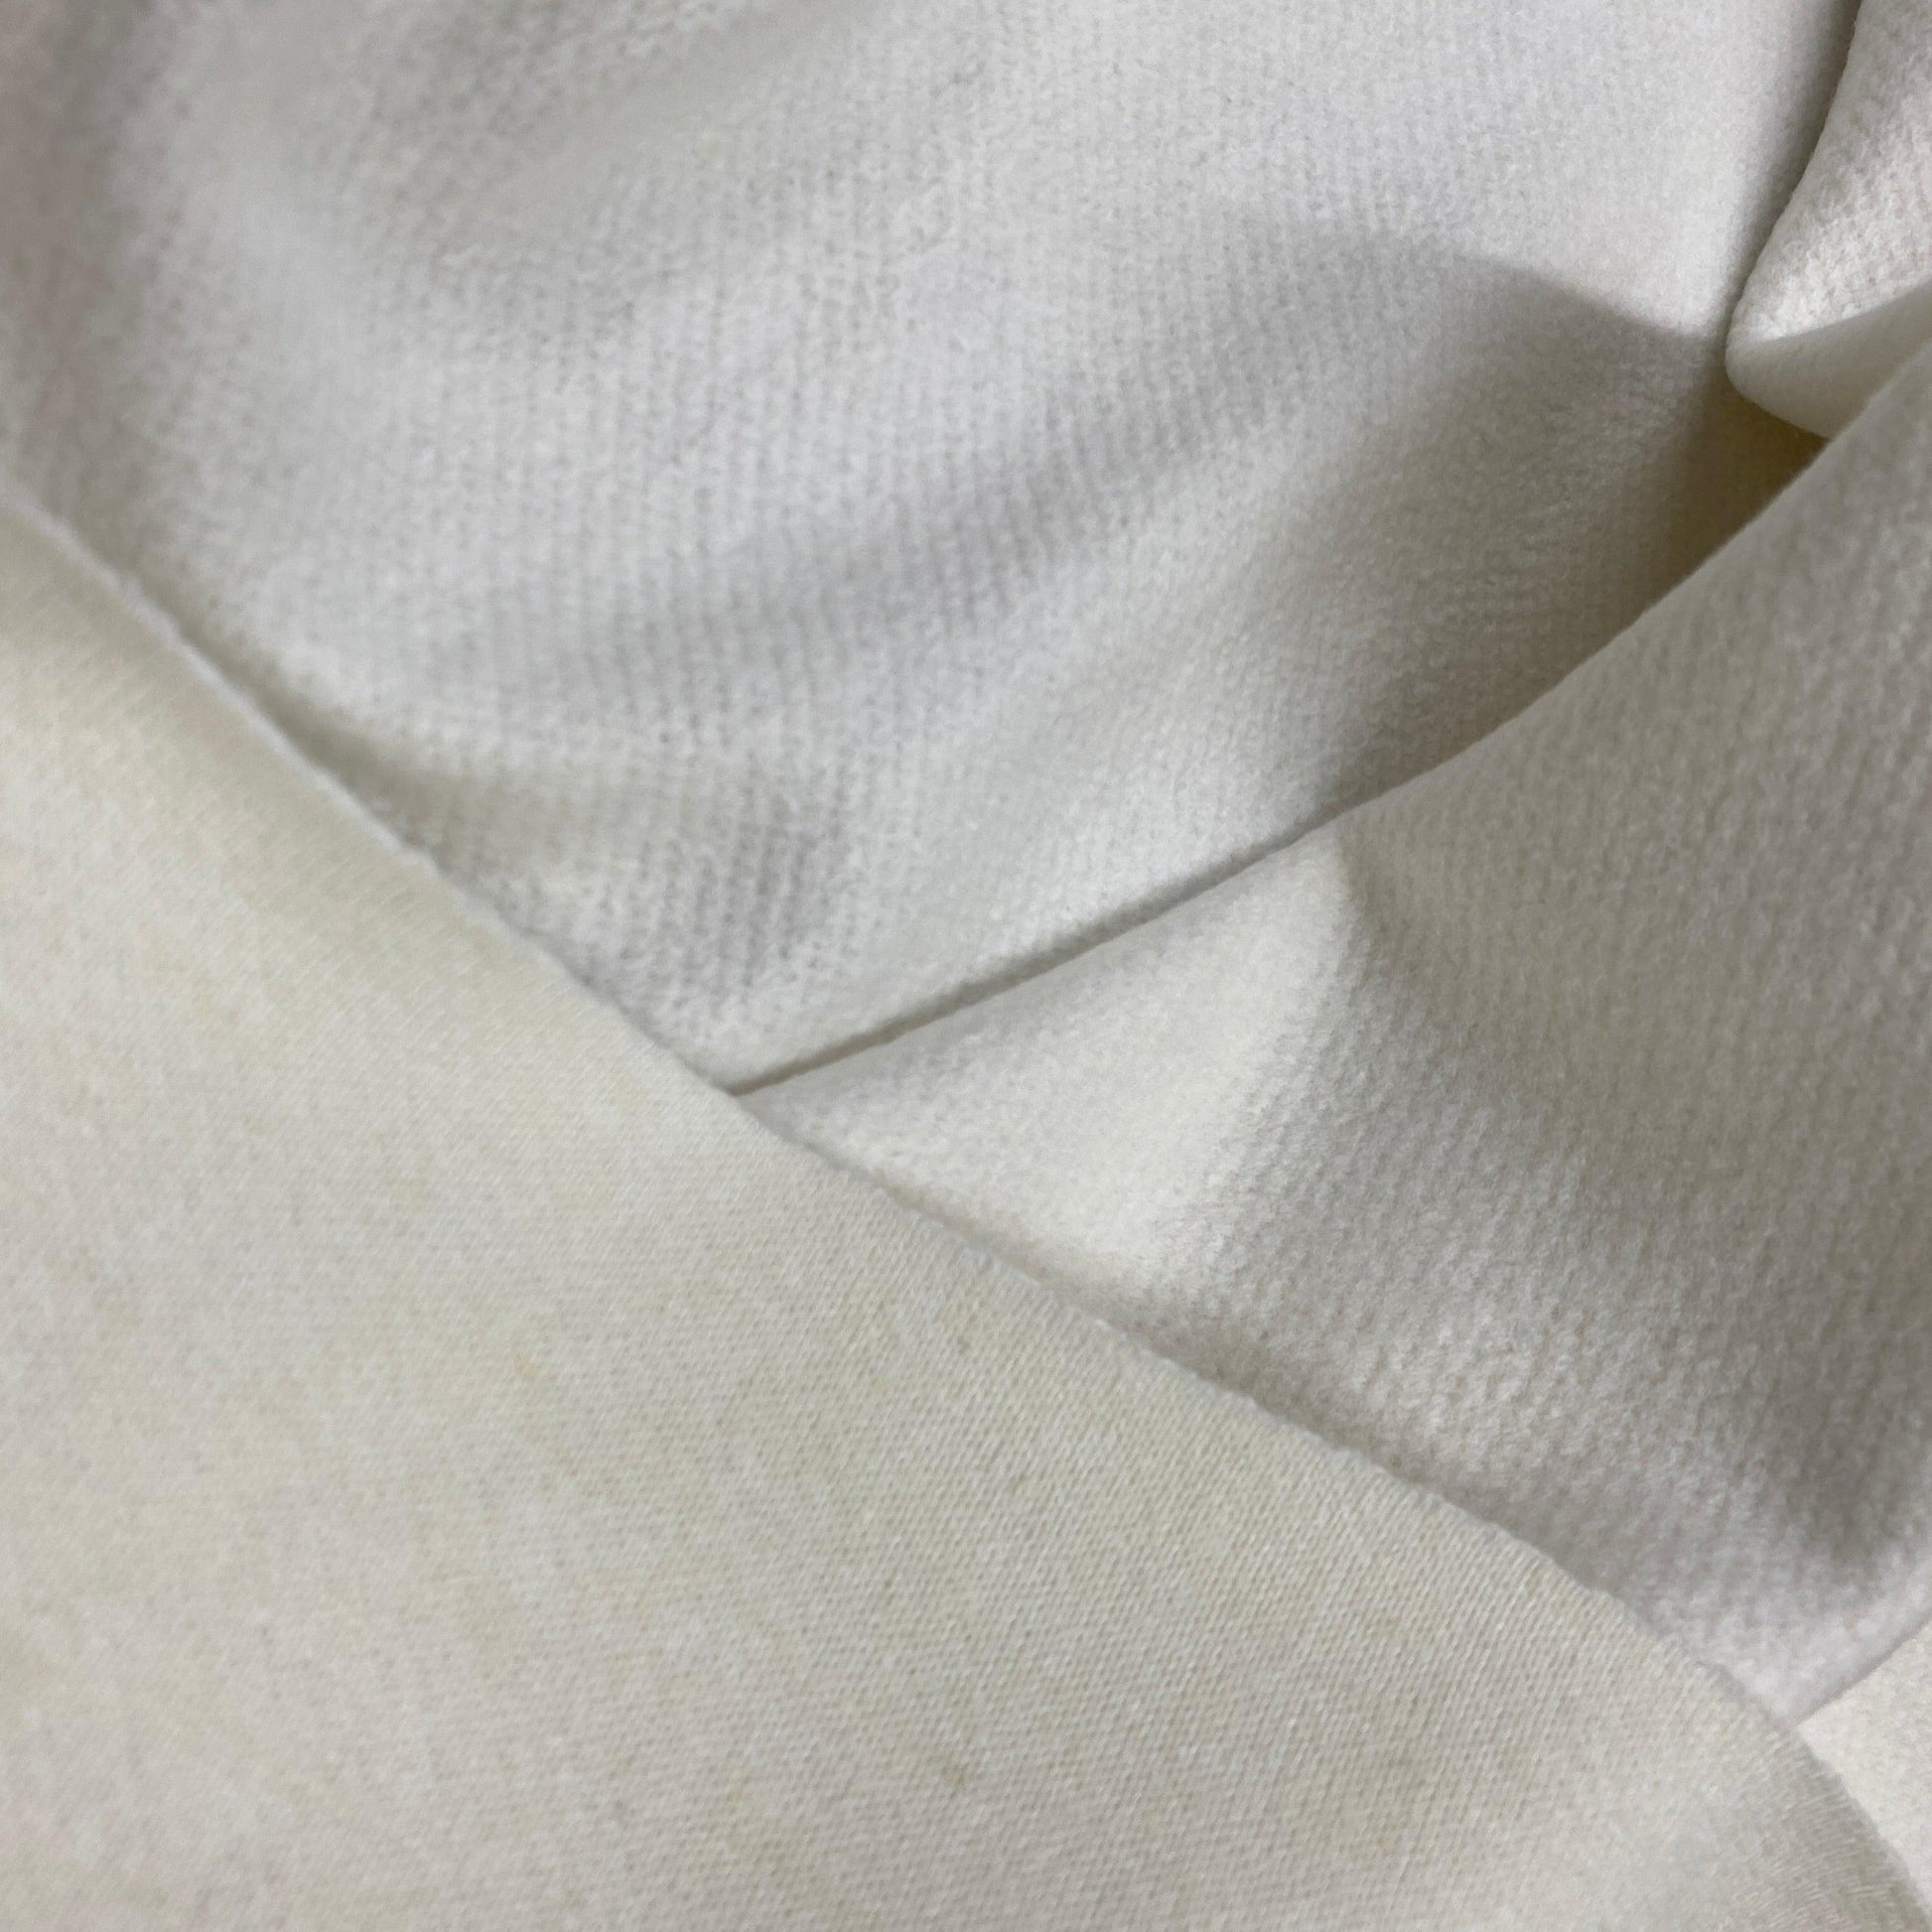 Bamboo Hemp Fleece Fabric - 400 GSM, $12.88/yd, 15 Yards - Nature's Fabrics